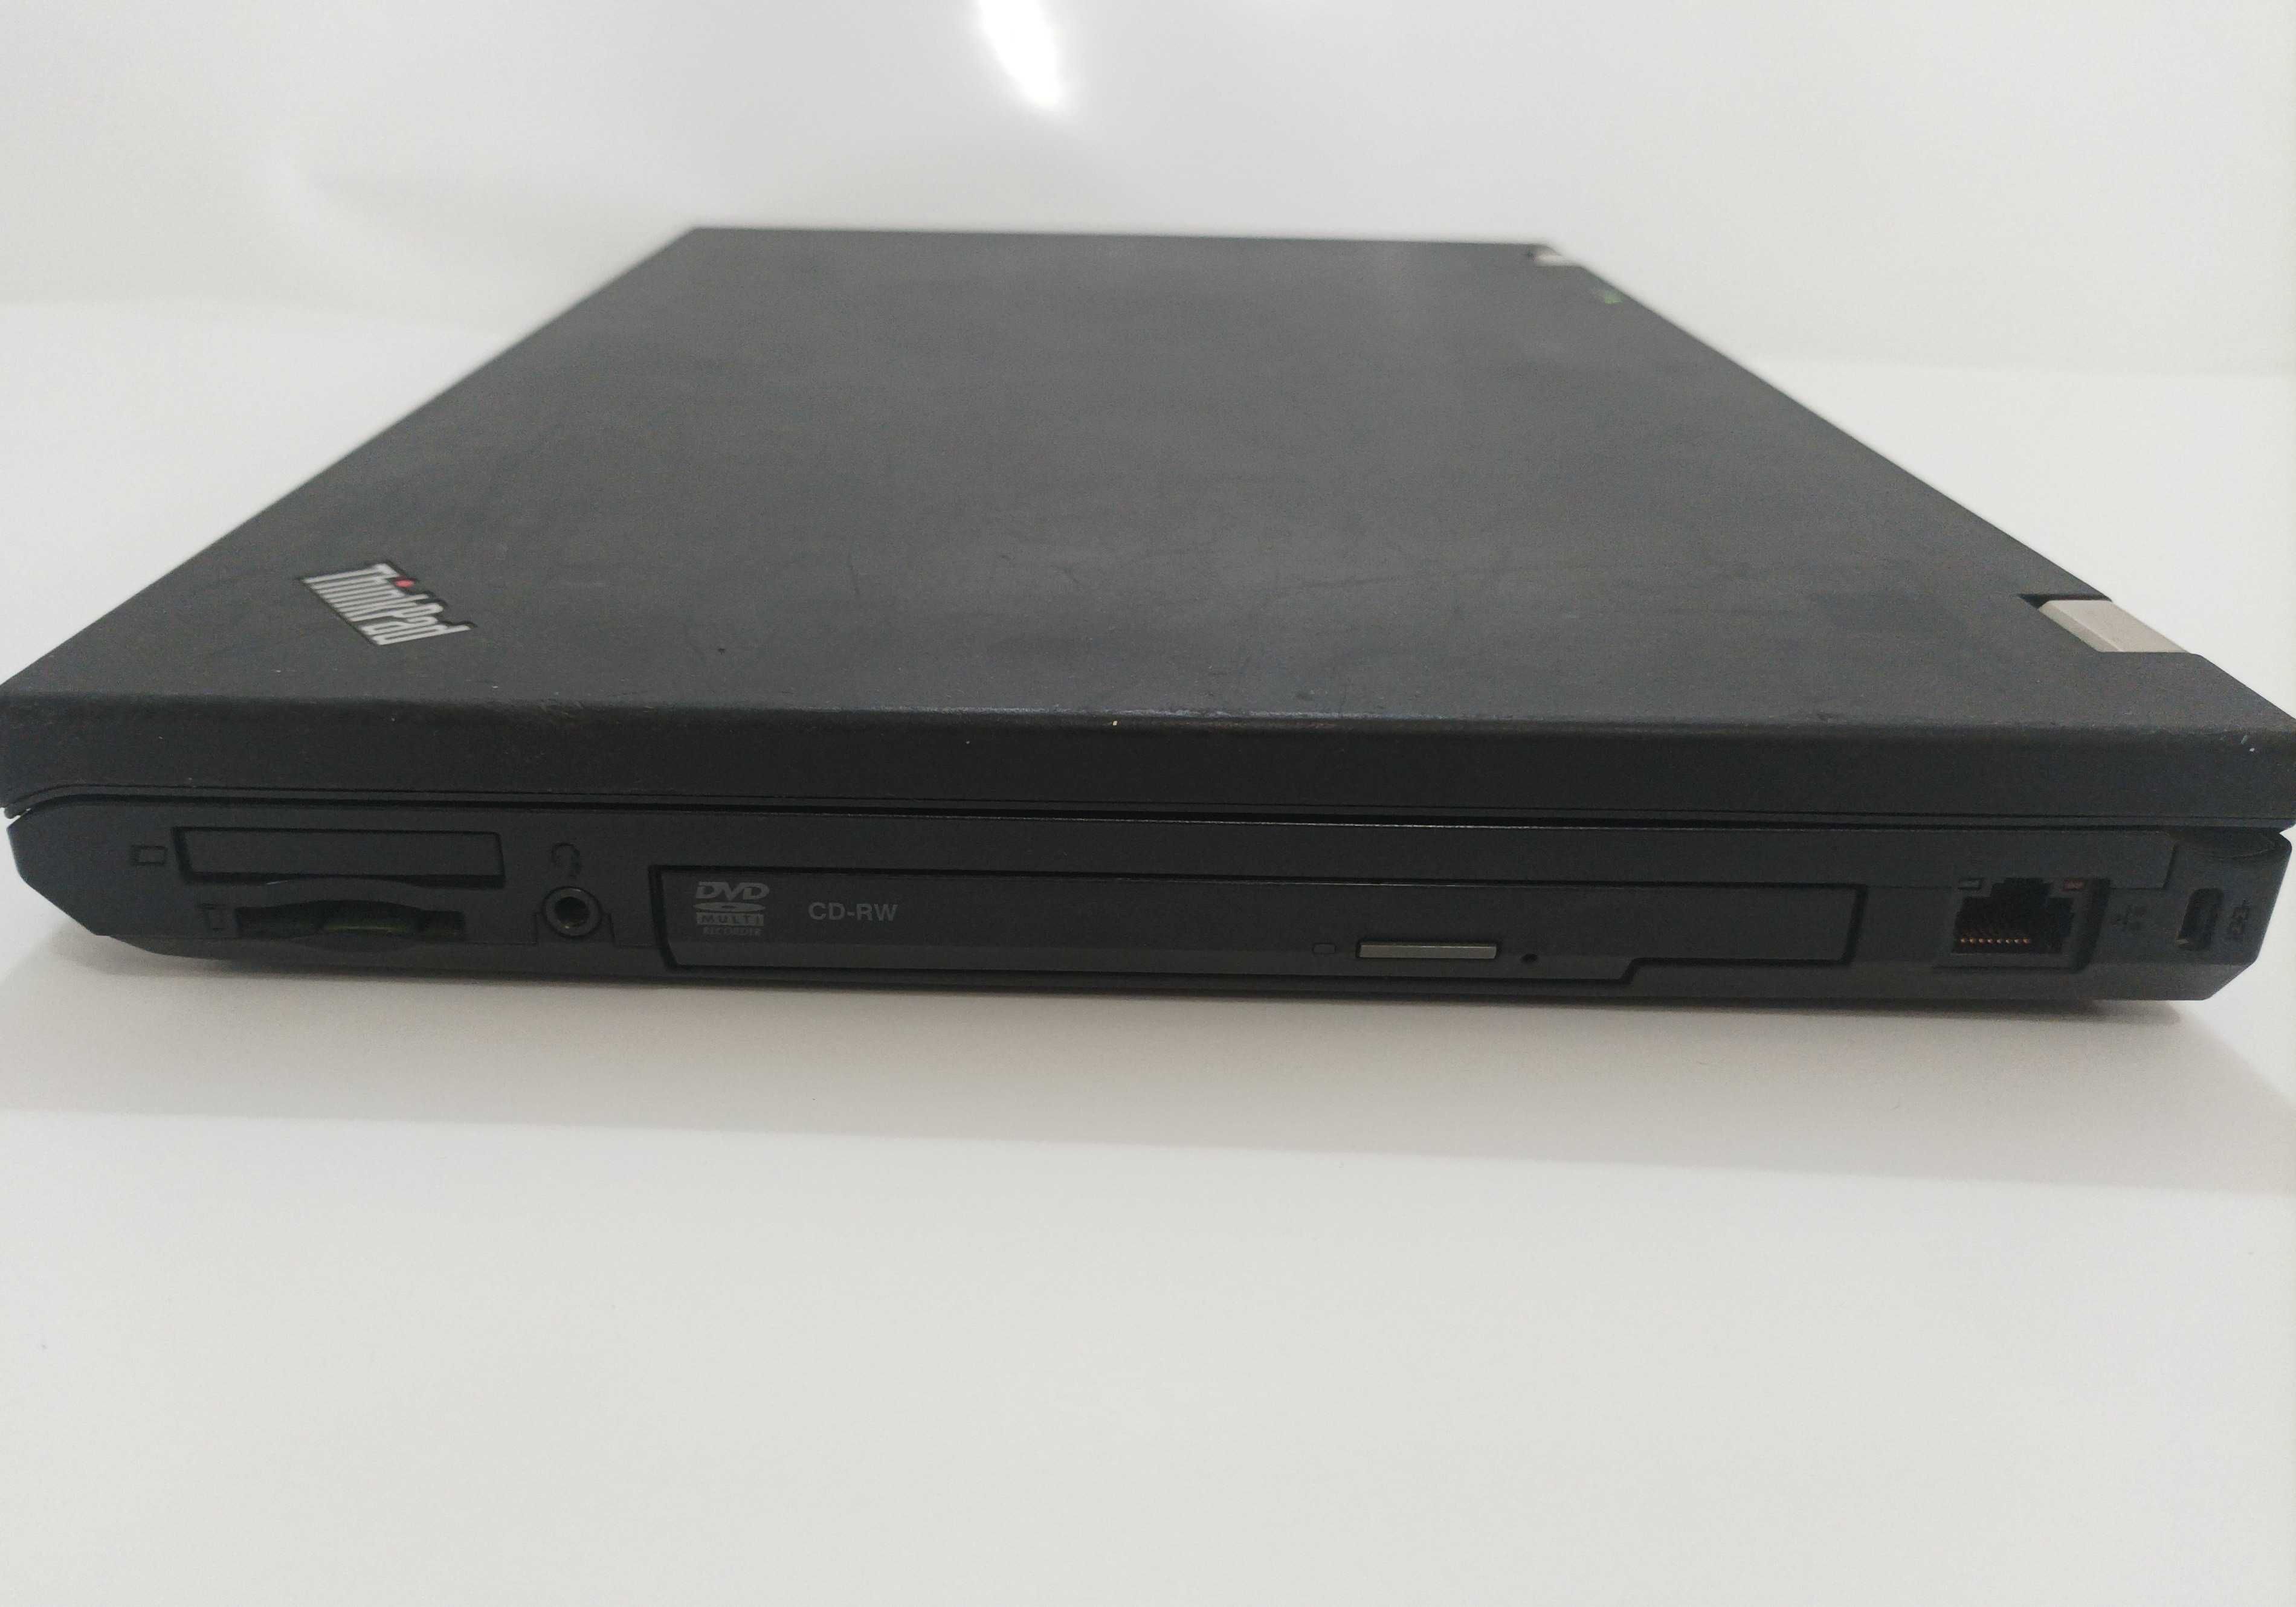 Laptop Lenovo ThinkPad W510, I7 1,6 GHz, nVidia 2GB, Doking Station